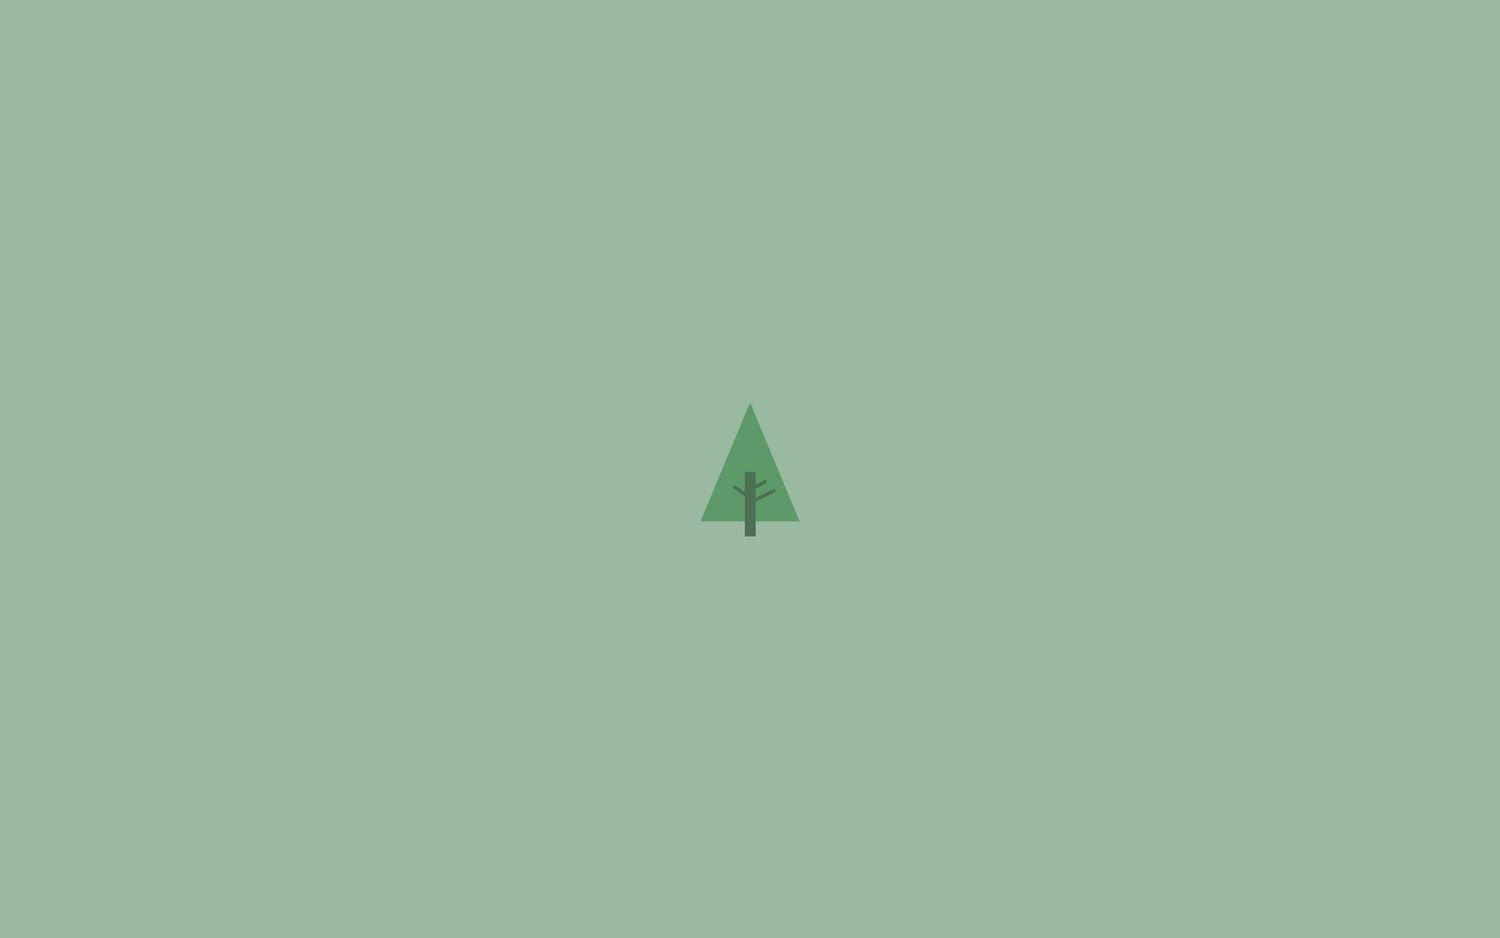 Simple Aesthetic Pine Tree Wallpaper